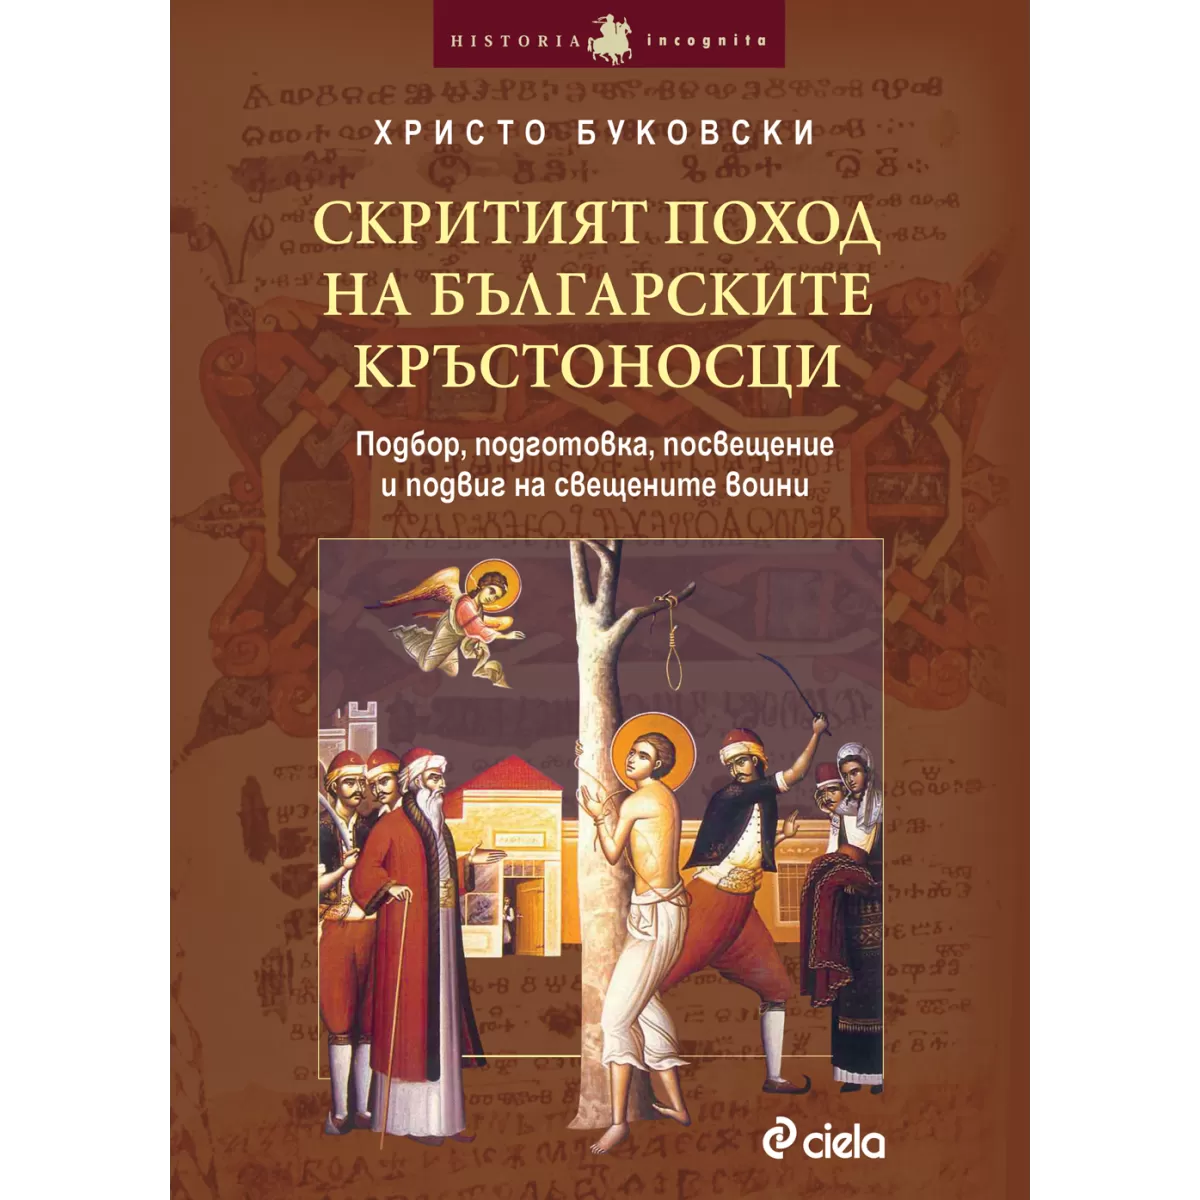 Скритият поход на българските кръстоносци/Подбор, подготовка, посвещение и подвиг на свещените воини